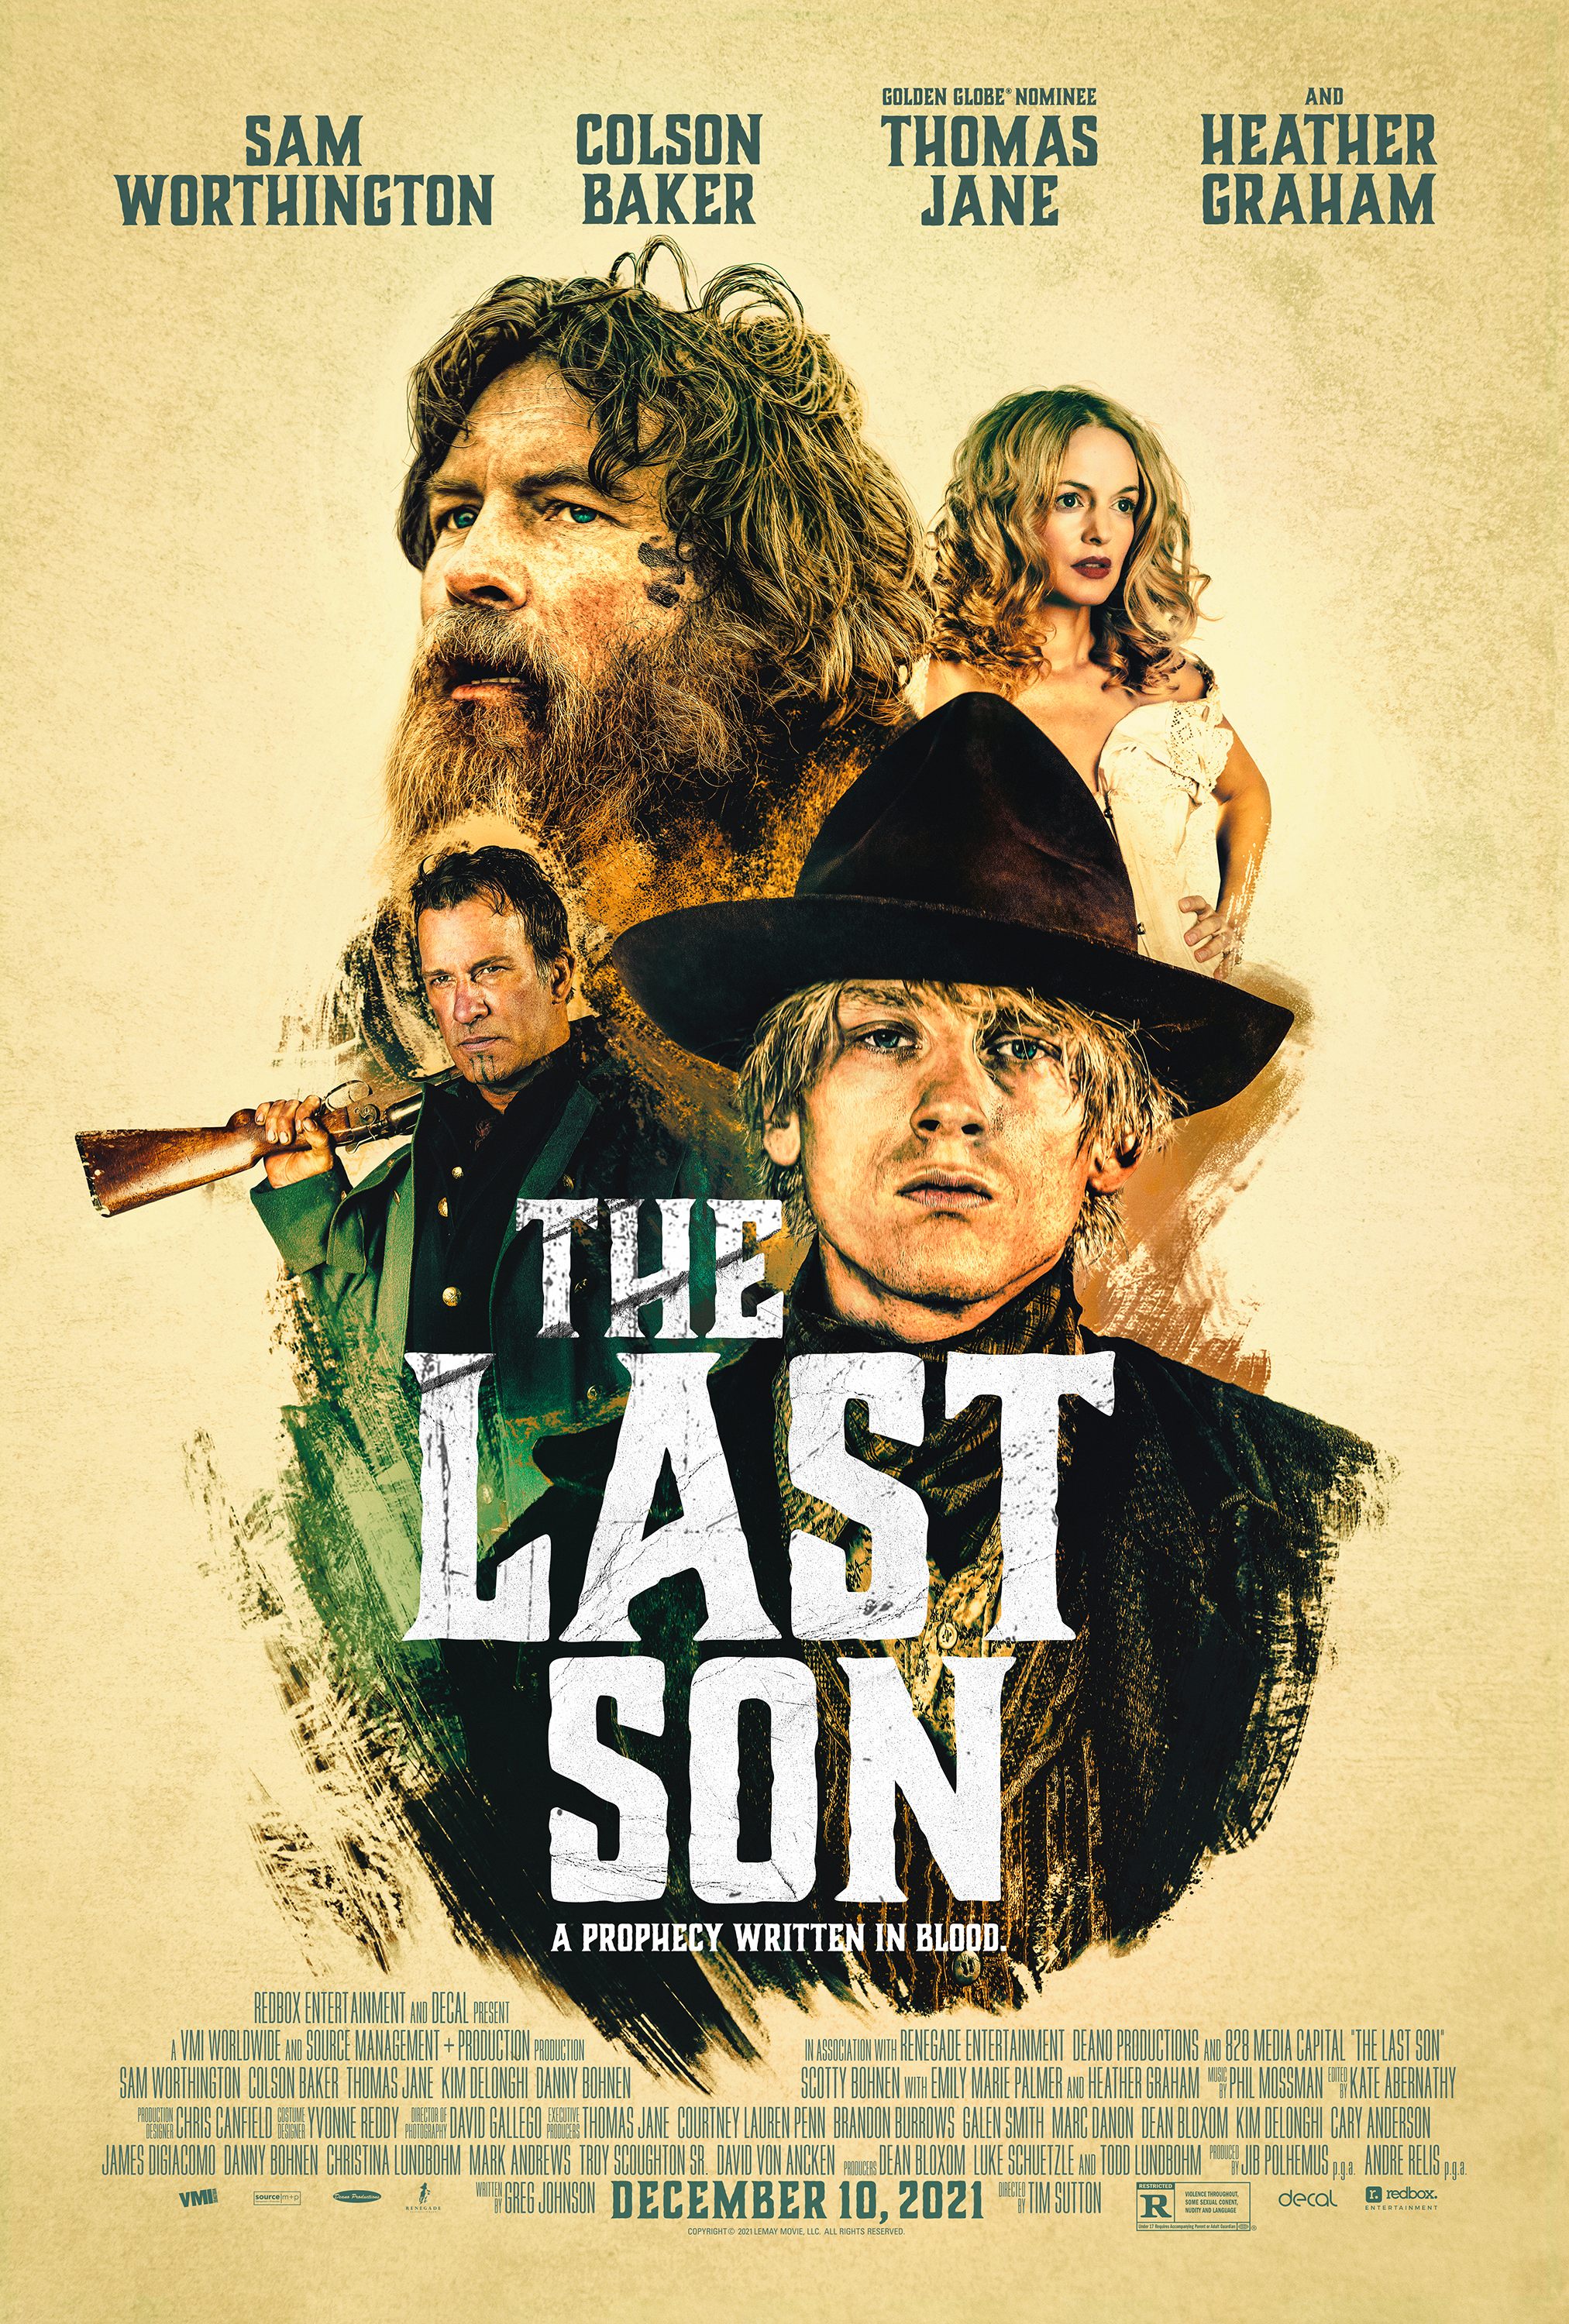 Stiahni si Filmy CZ/SK dabing Poslední syn / The Last Son (2021)(CZ)[WebRip][1080p] = CSFD 46%